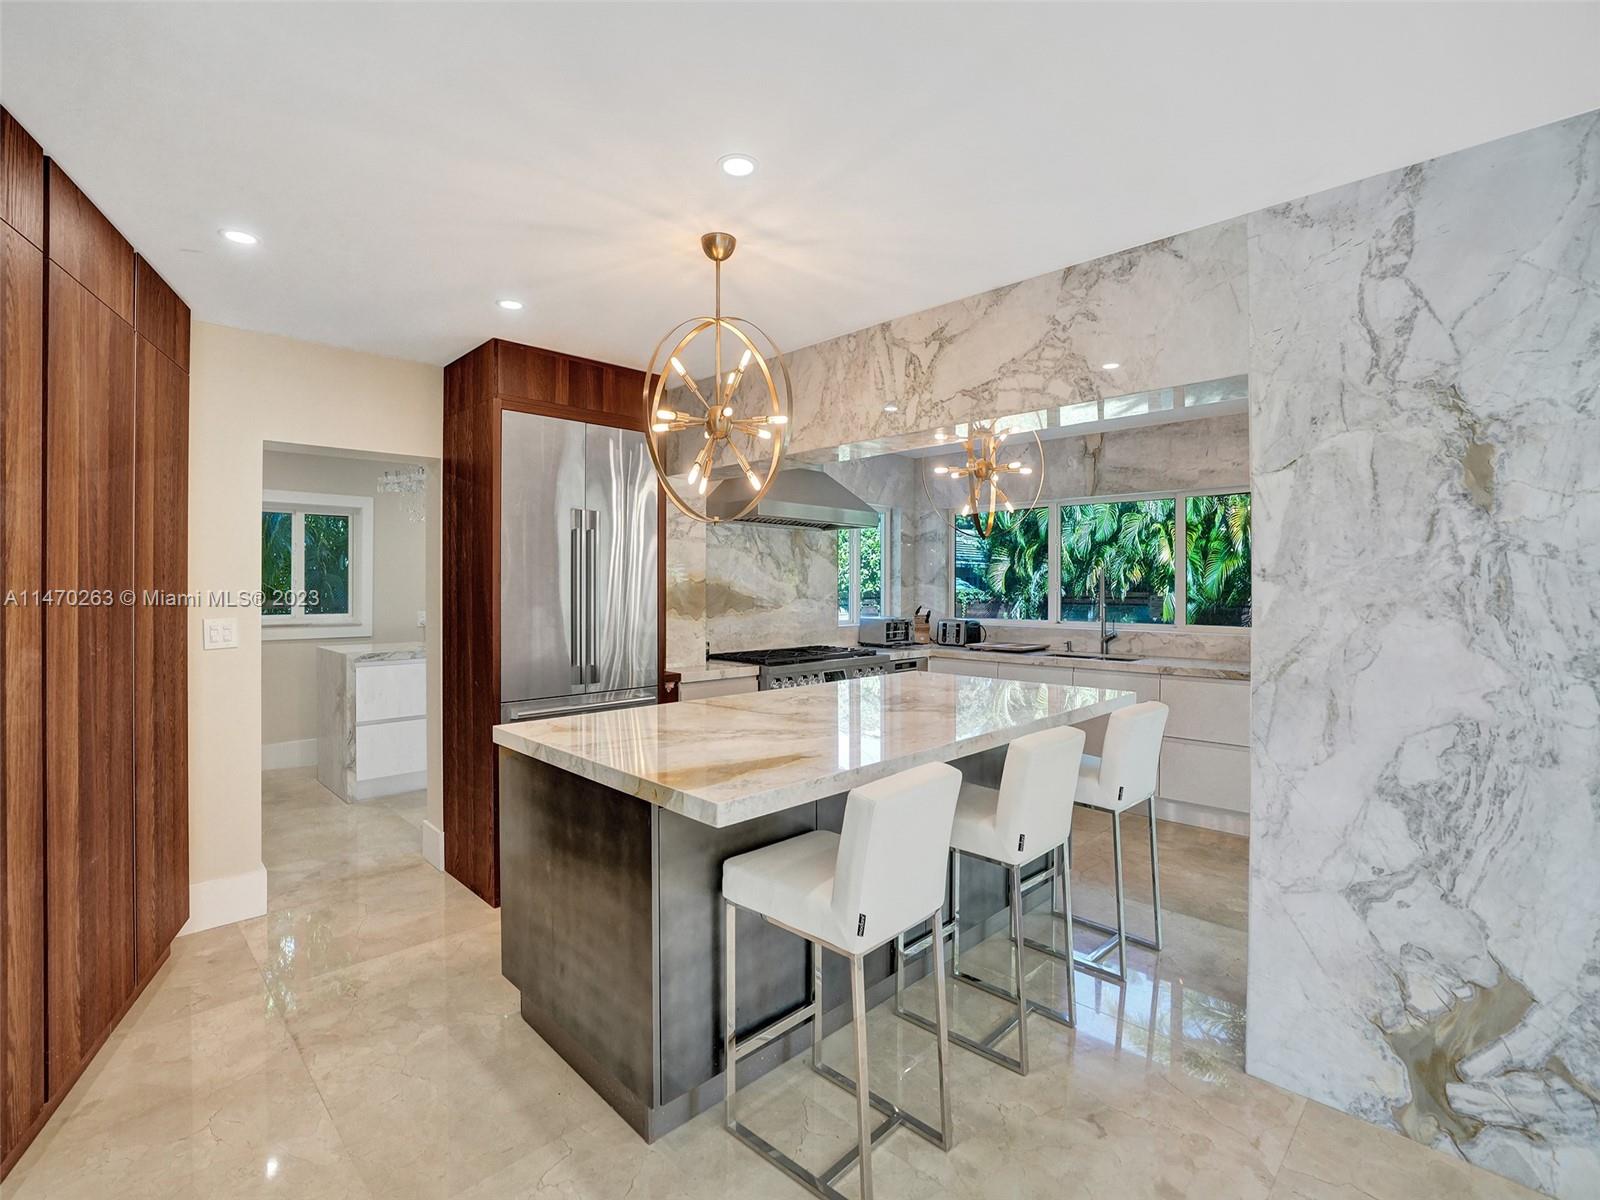 Rental Property at 2421 Ne 7th Pl Pl, Fort Lauderdale, Broward County, Florida - Bedrooms: 4 
Bathrooms: 3  - $9,500 MO.